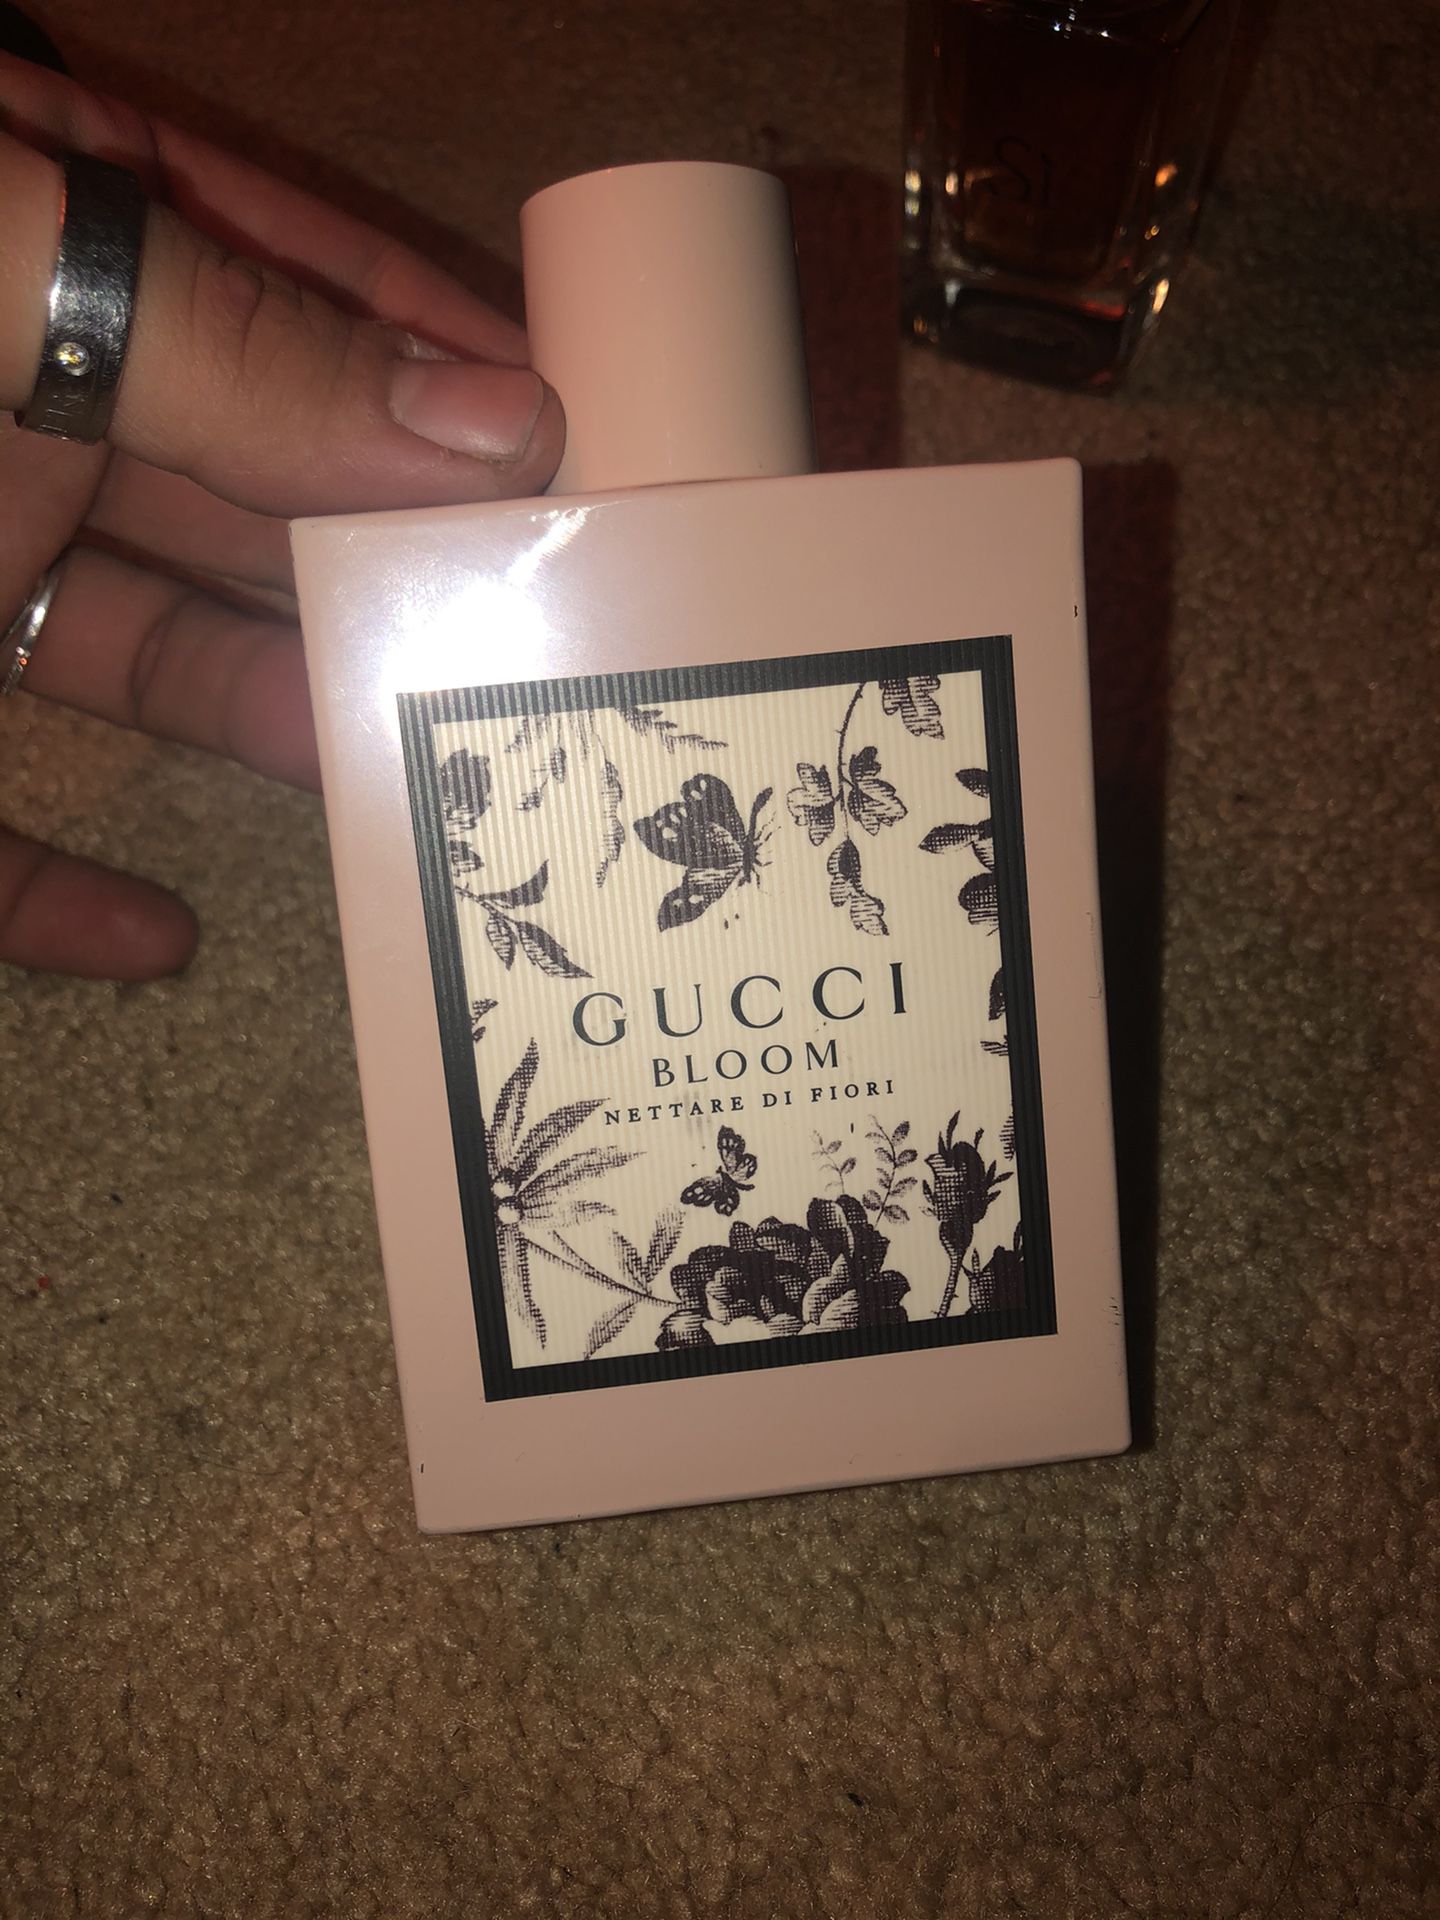 Gucci Bloom Perfume brand new